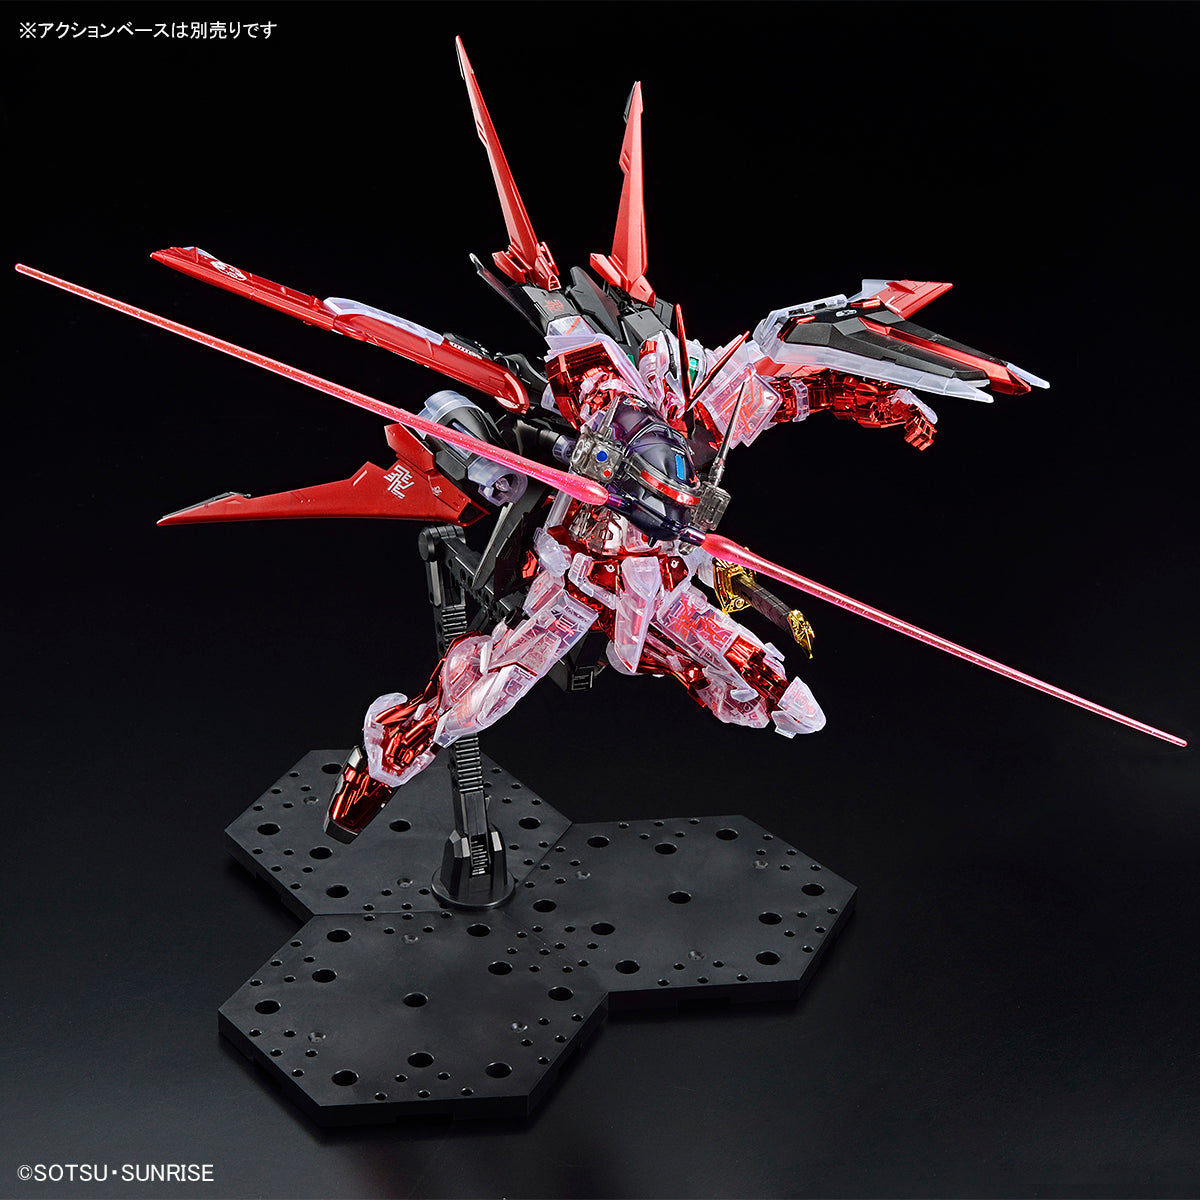 MG 1/100 Gundam Base Limited Gundam Astray Red Frame Flight Unit Plating Frame / Color Clear